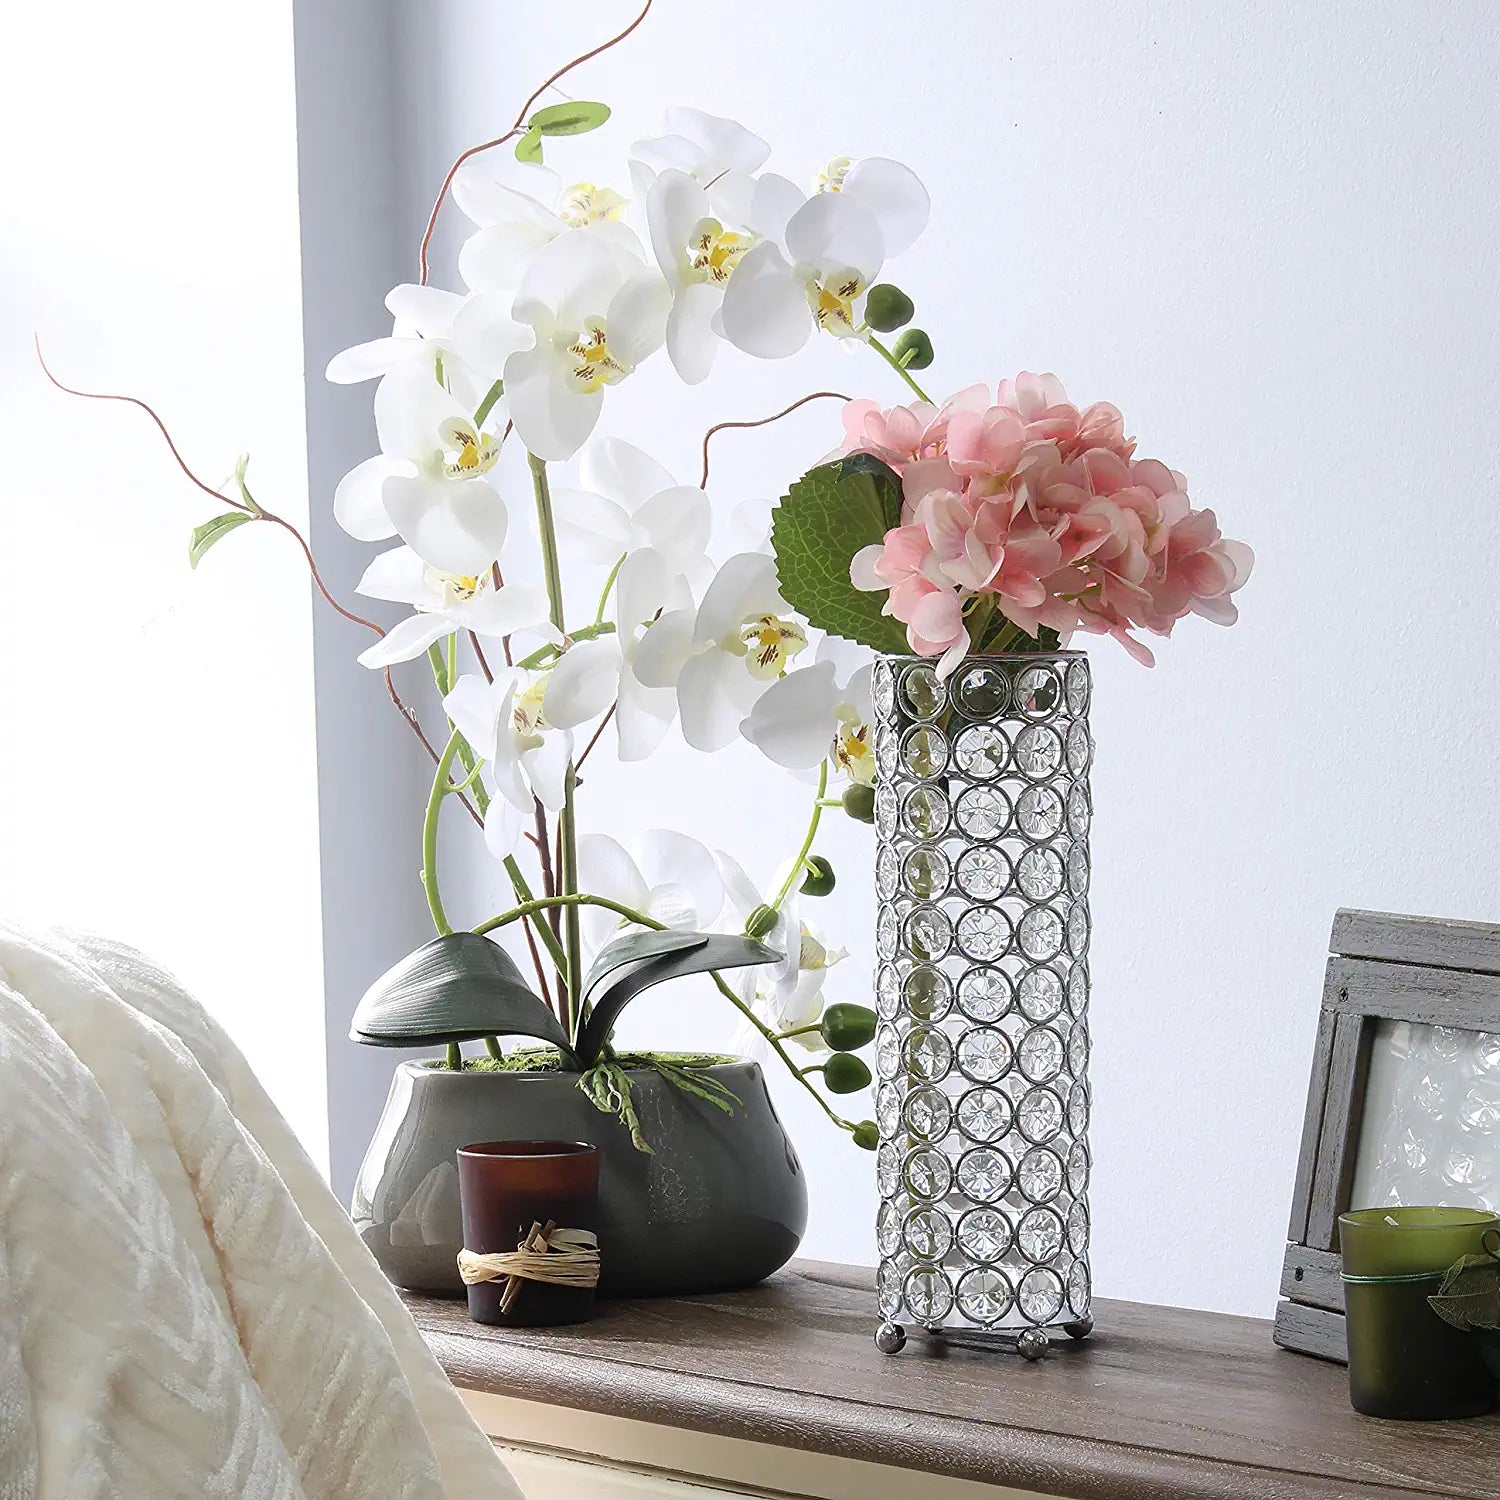 Elegant Designs Elipse Crystal Decorative Flower Vase, Candle Holder, Wedding Centerpiece, 10.25 Inch, Chrome